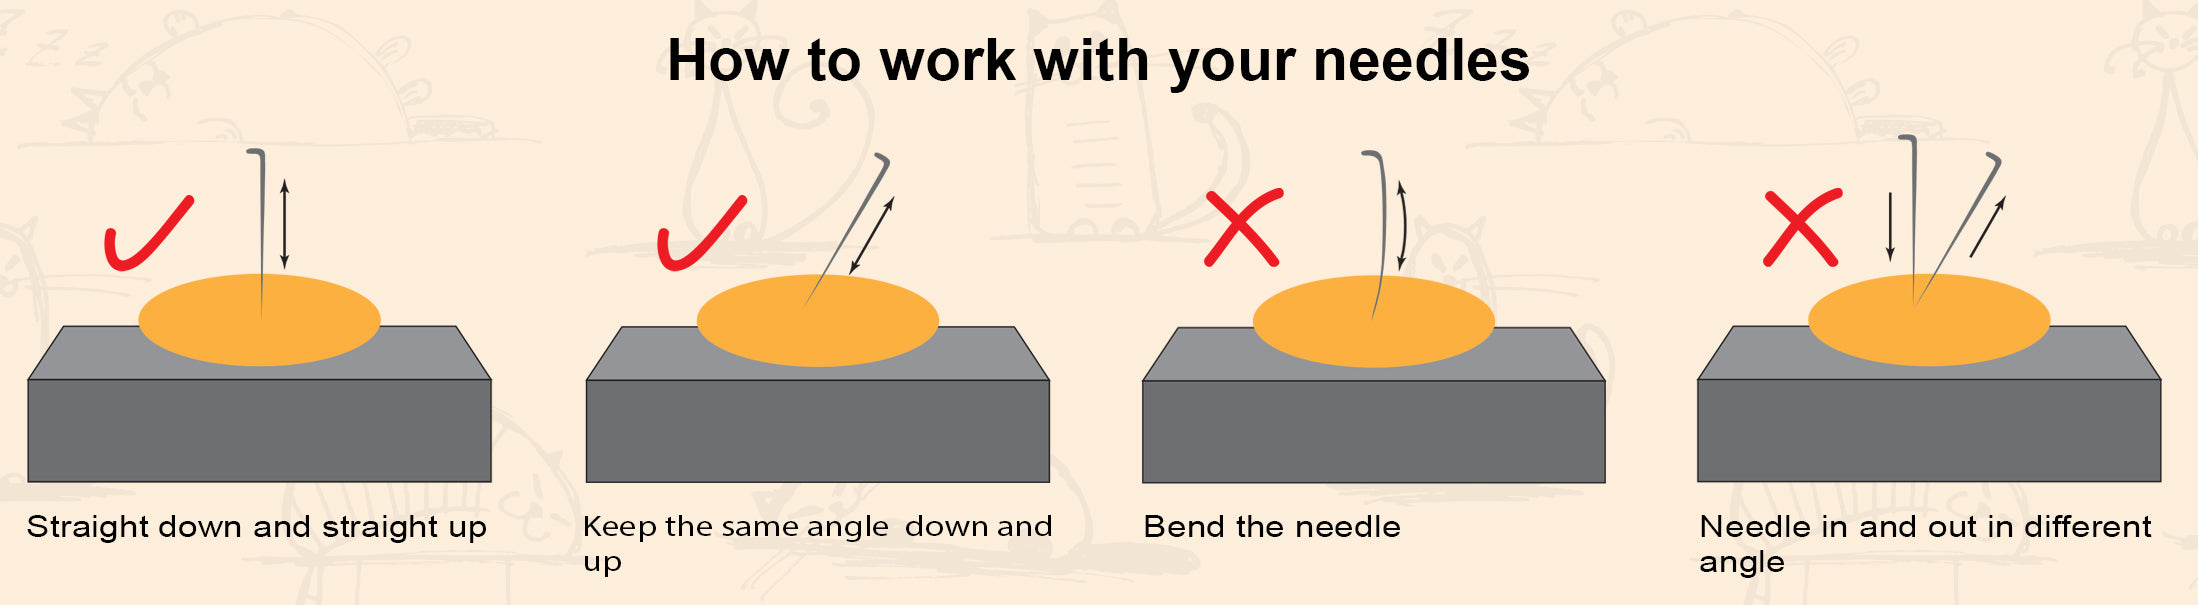 How_To_Work_with_Needle_neele_felting_101_catatroof